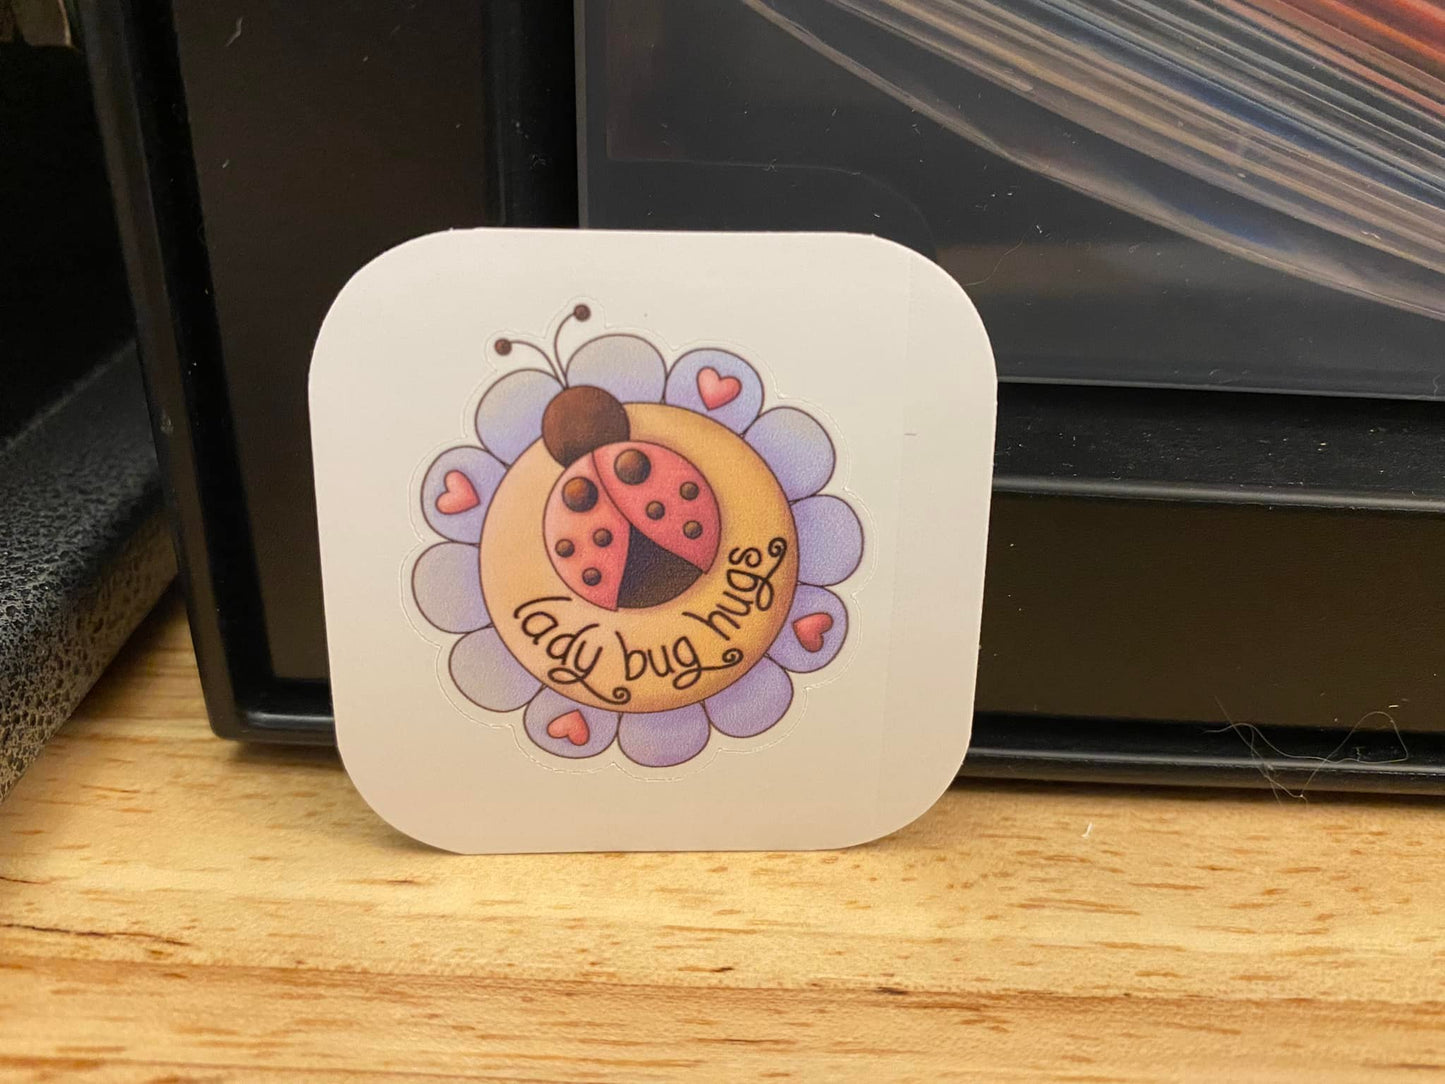 Cute Lady Bug Hugs Sticker